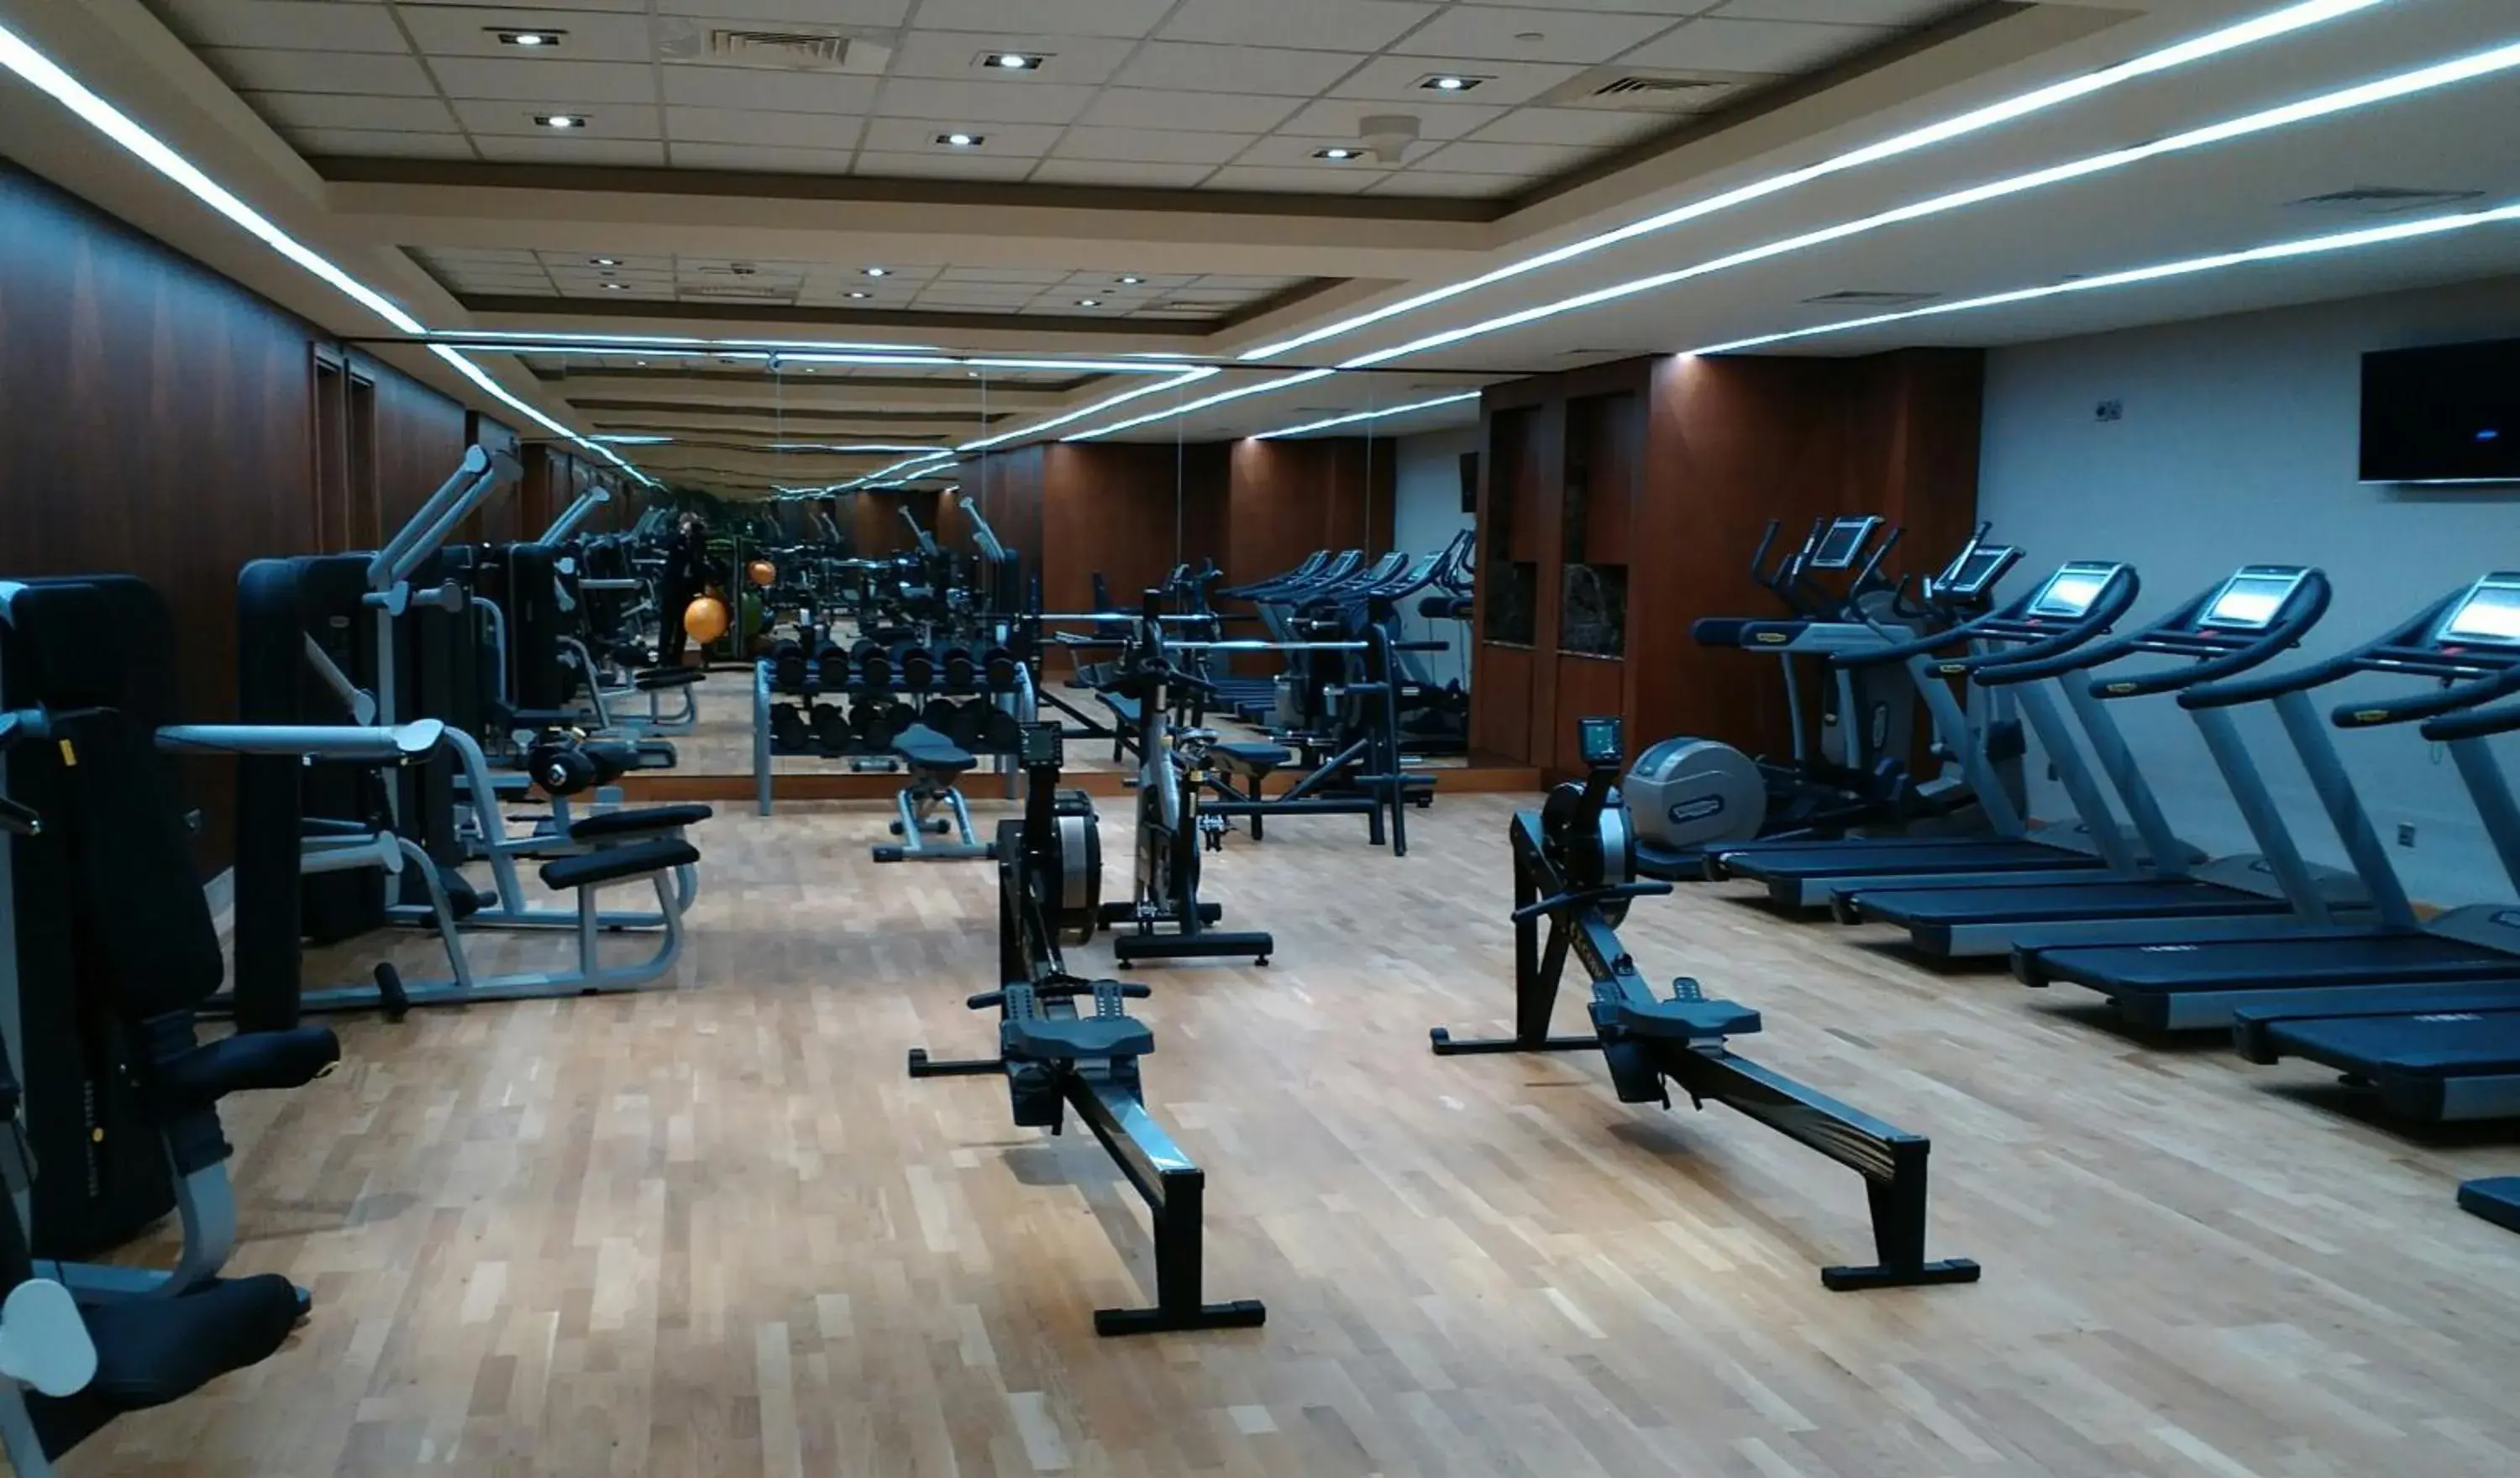 Fitness centre/facilities, Fitness Center/Facilities in Grand Millennium Muscat